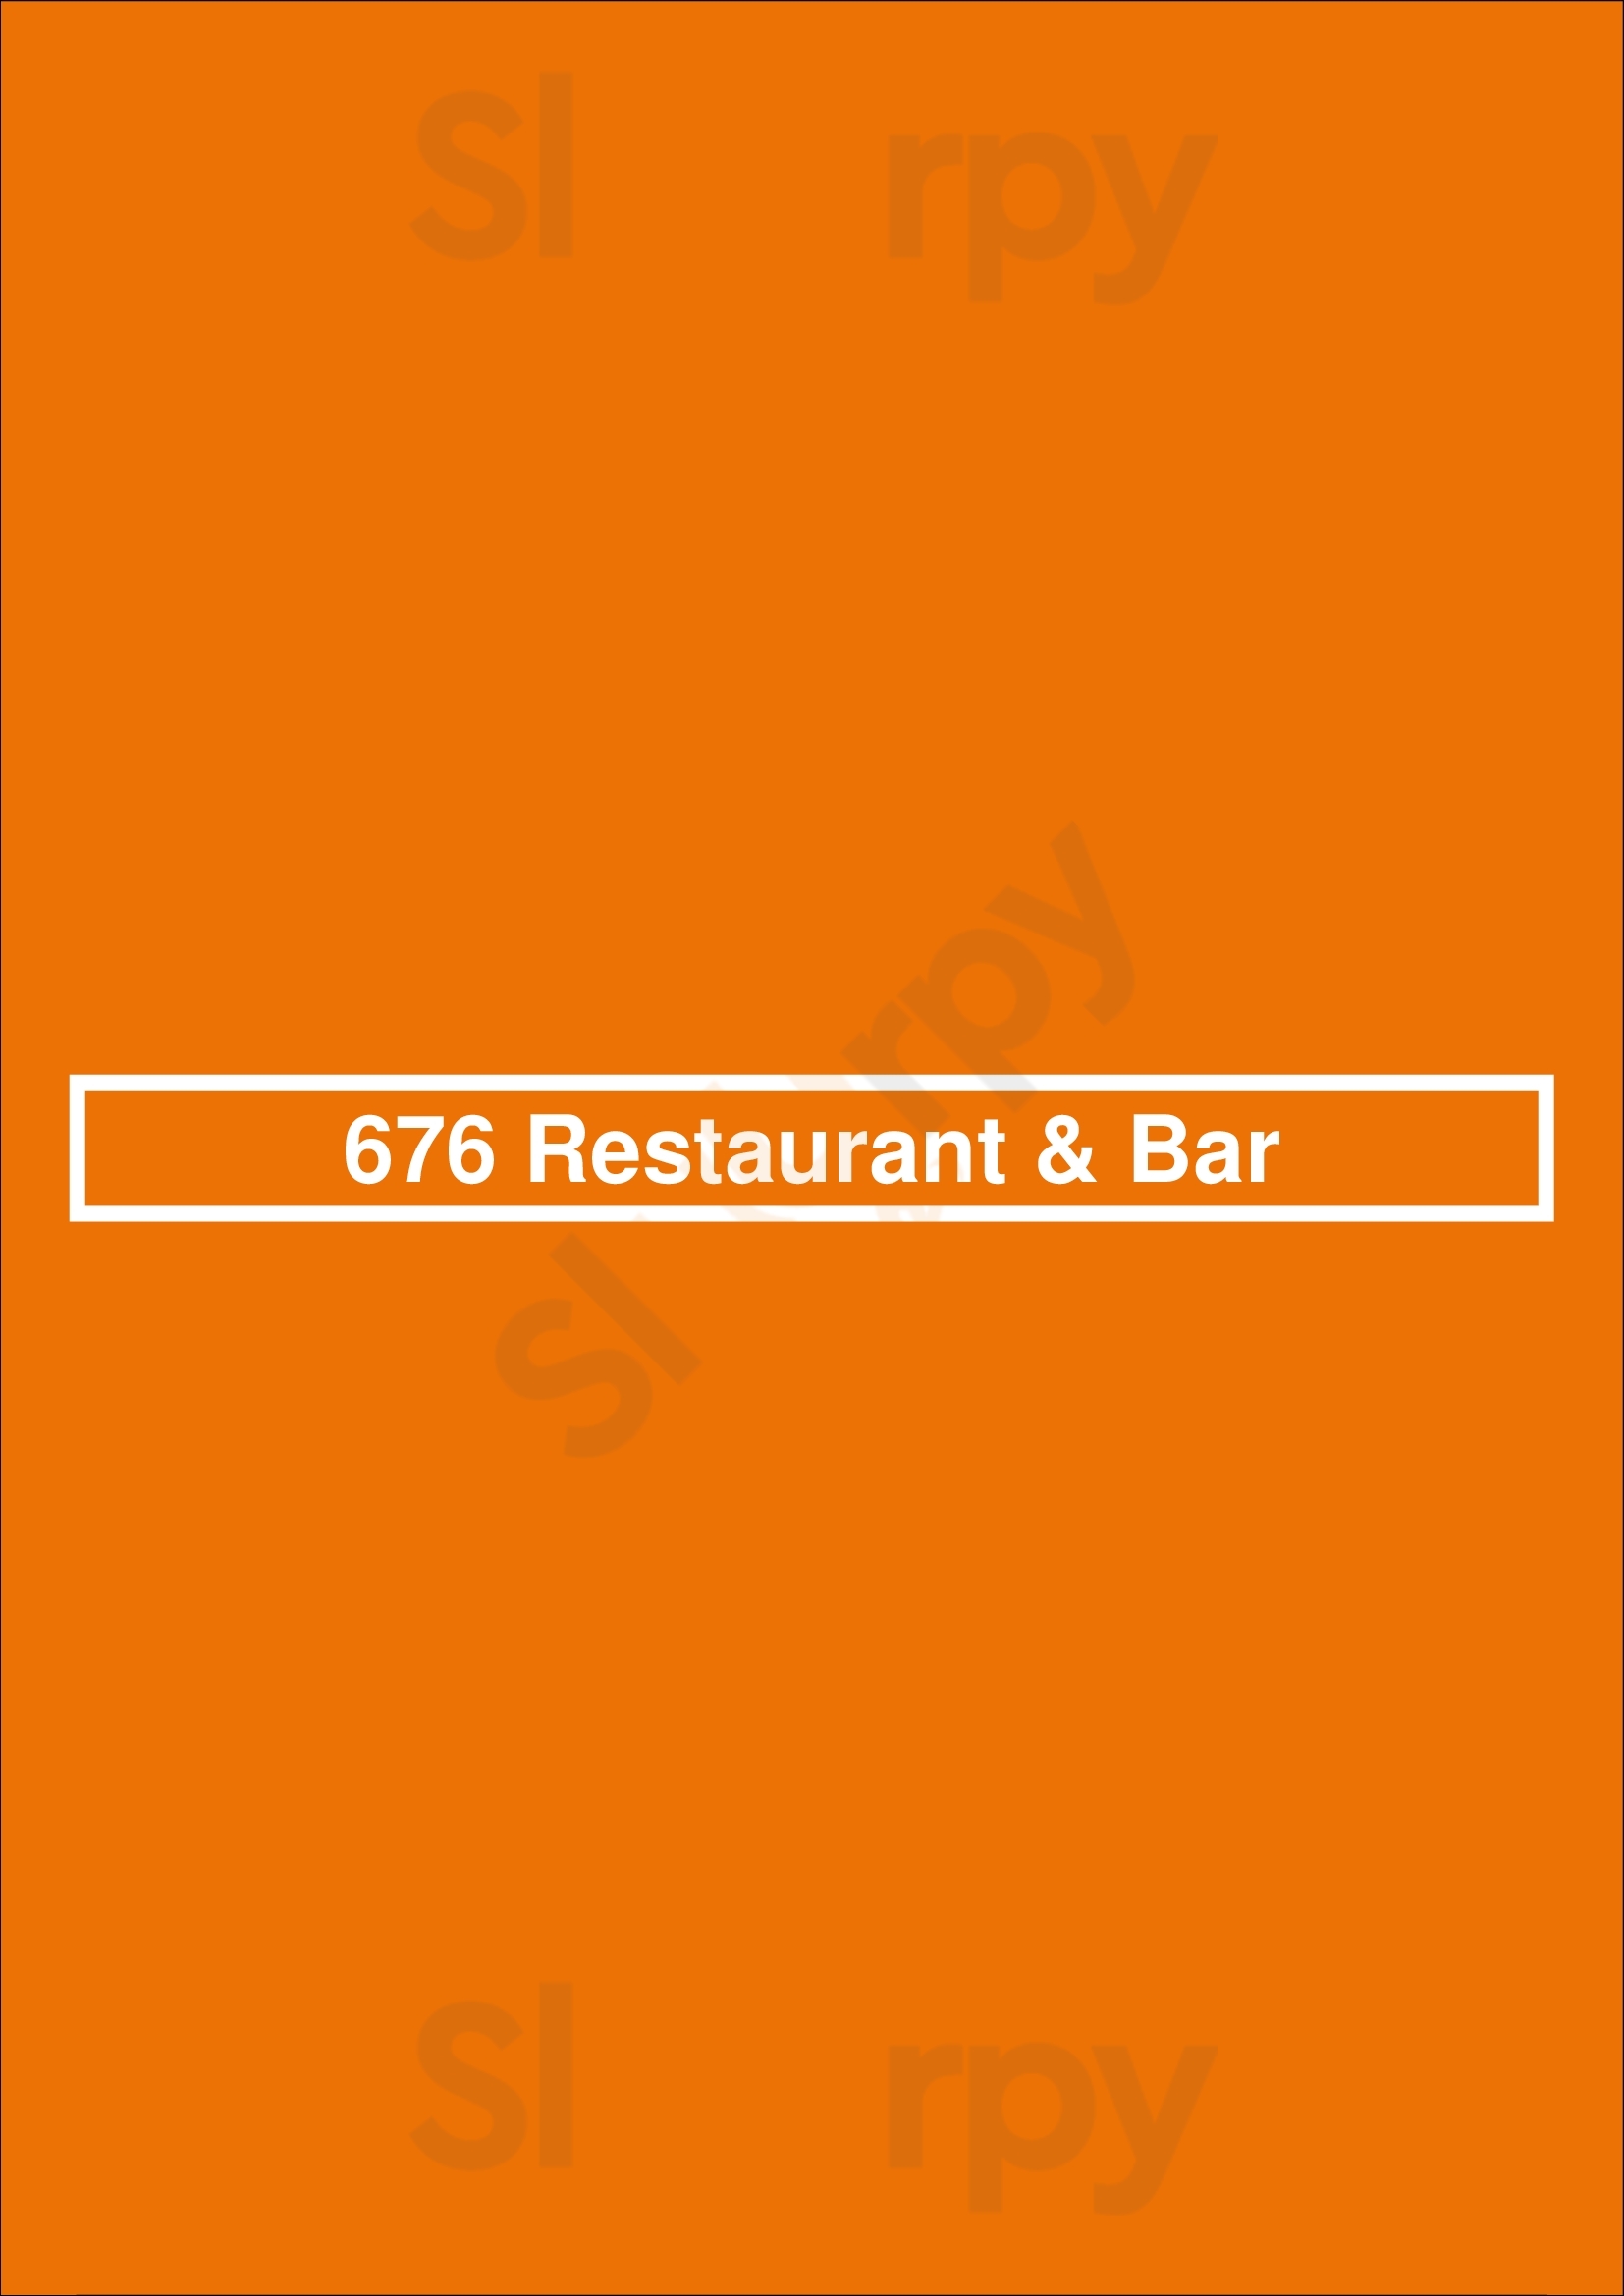 676 Restaurant & Bar Chicago Menu - 1